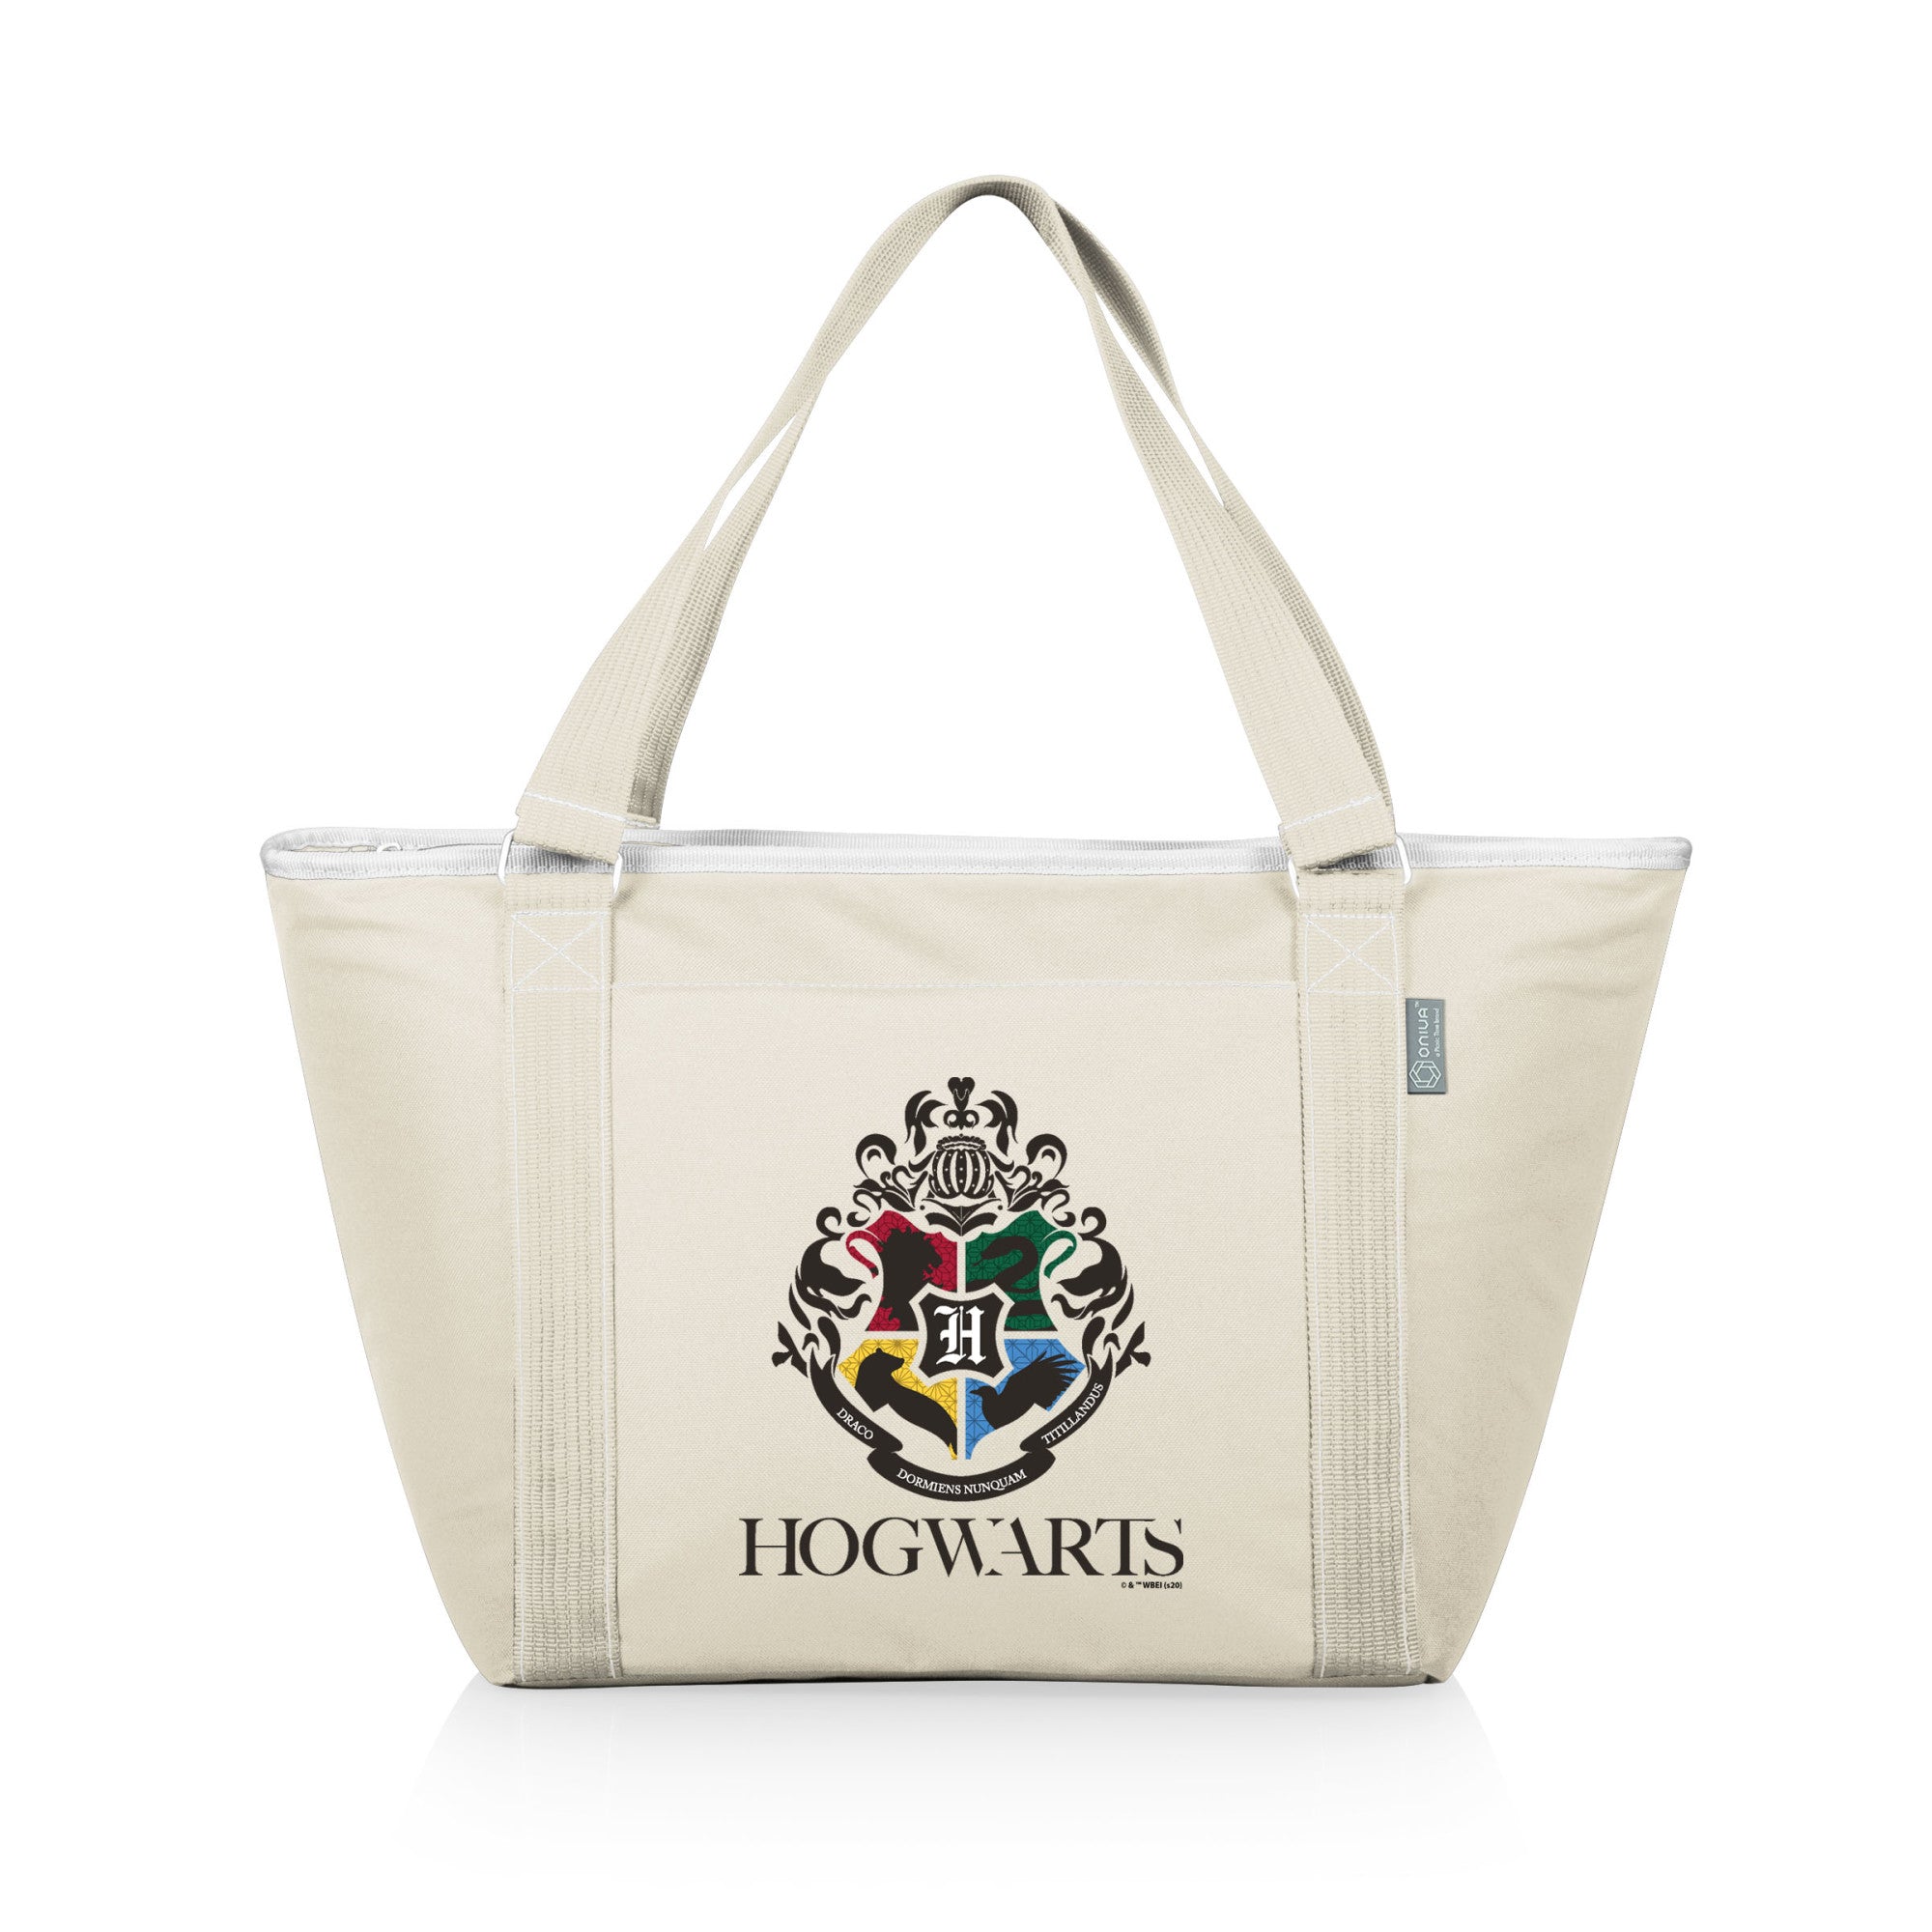 Hogwarts - Harry Potter - Topanga Cooler Tote Bag